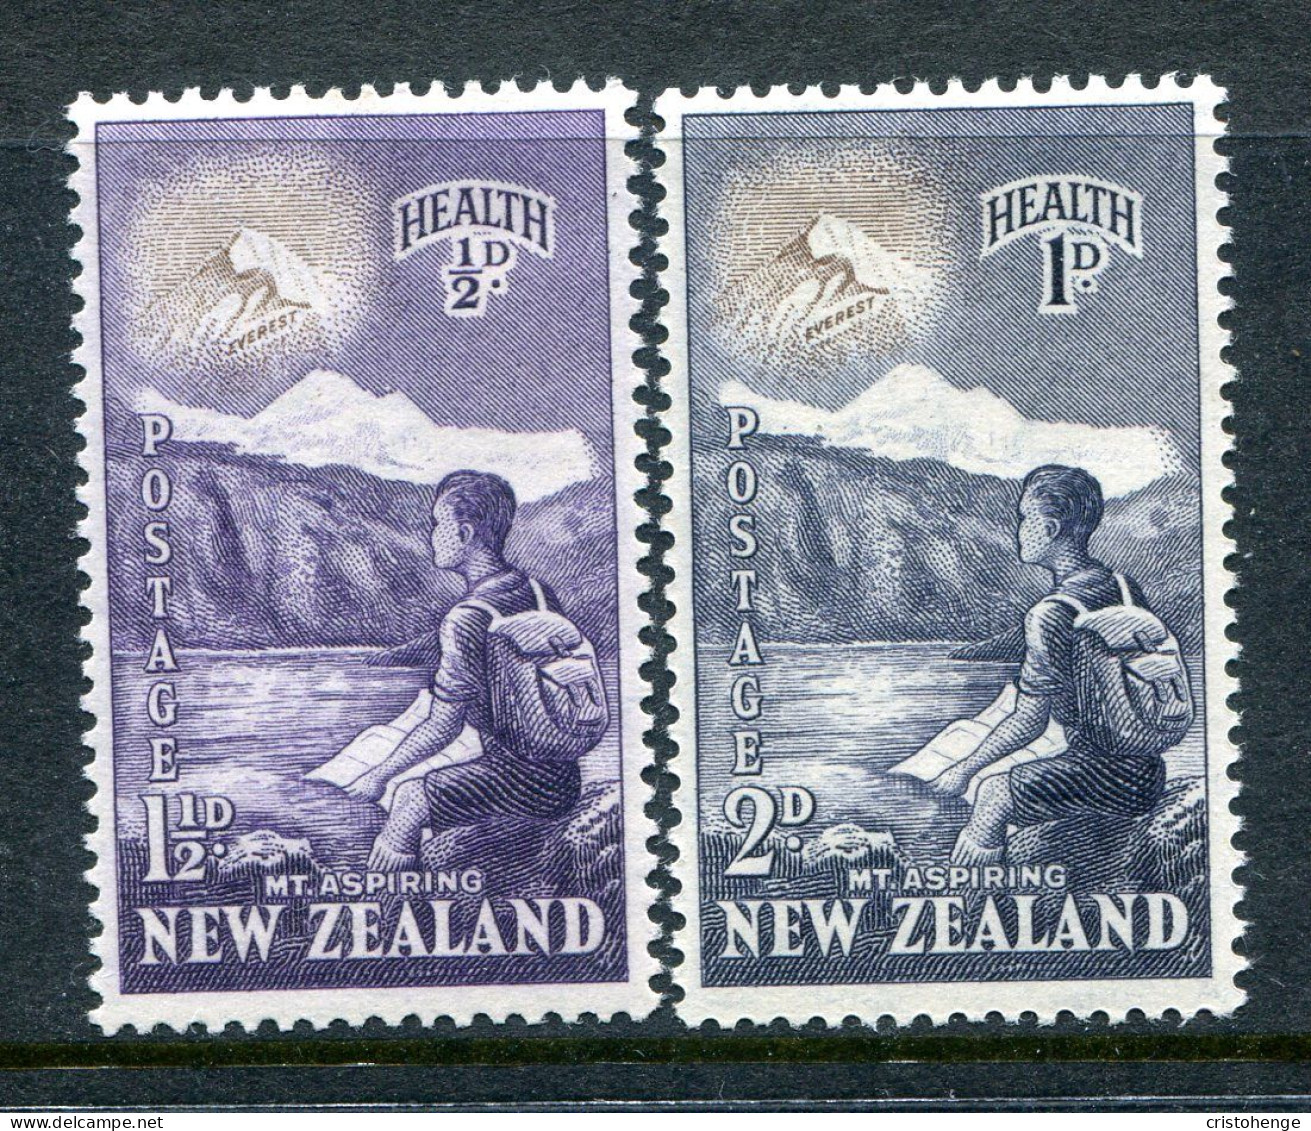 New Zealand 1954 Health - Climber, Mount Aspiring & Mt Everest Set HM (SG 737-738) - Unused Stamps